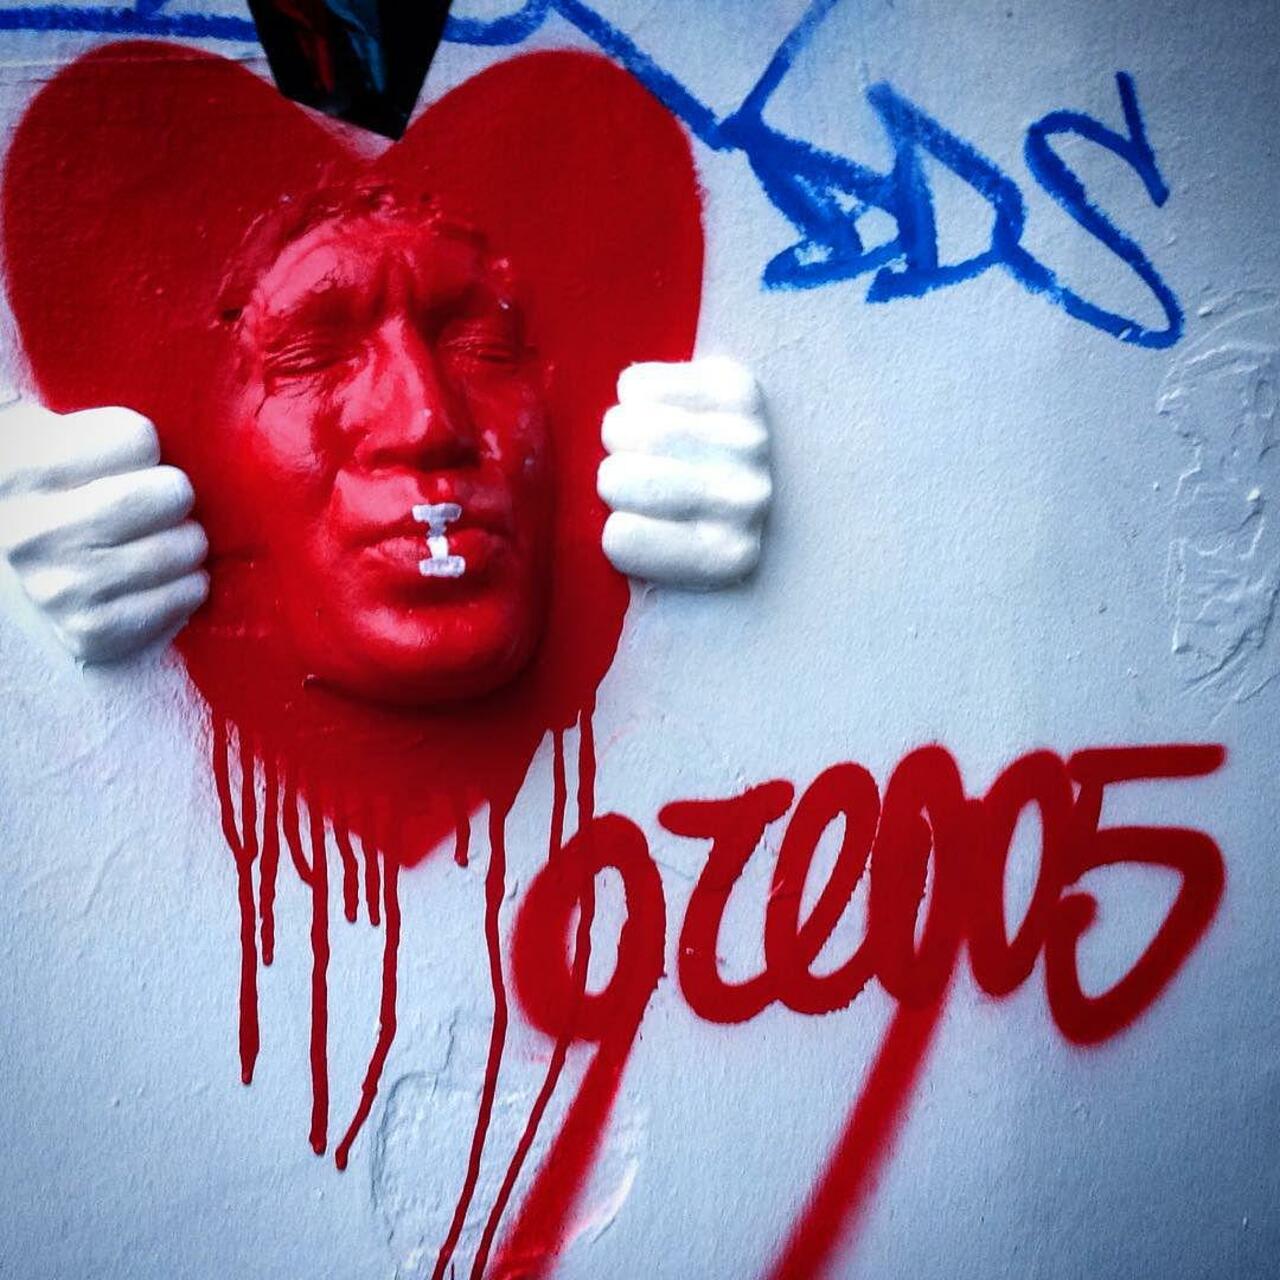 #Paris #graffiti photo by @stefetlinda http://ift.tt/1KgbsuR #StreetArt http://t.co/aDwjN2OqN6